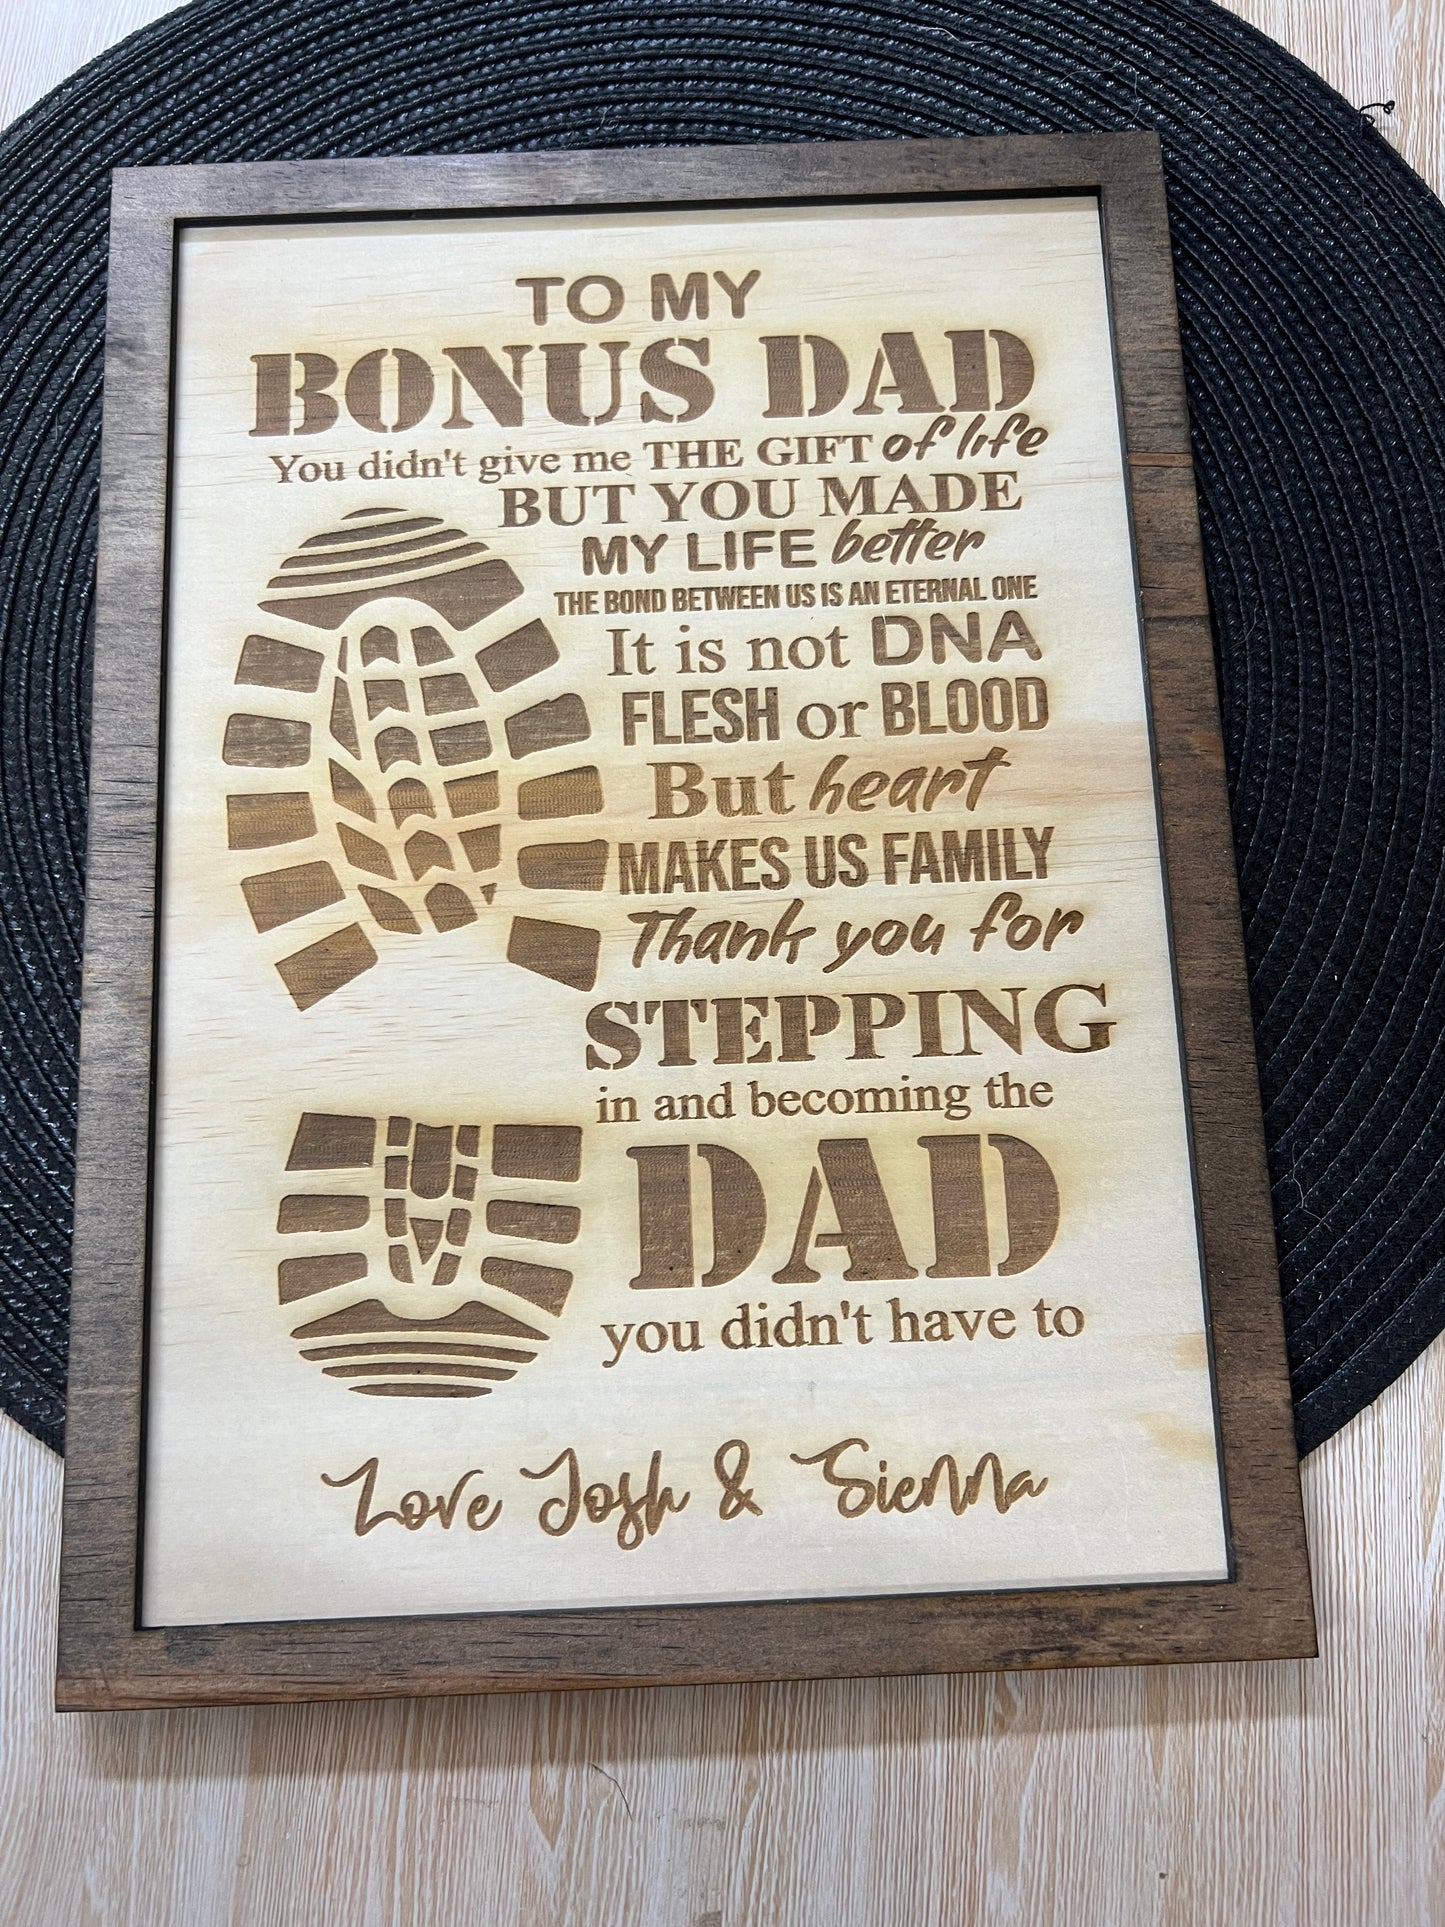 Dad plaques